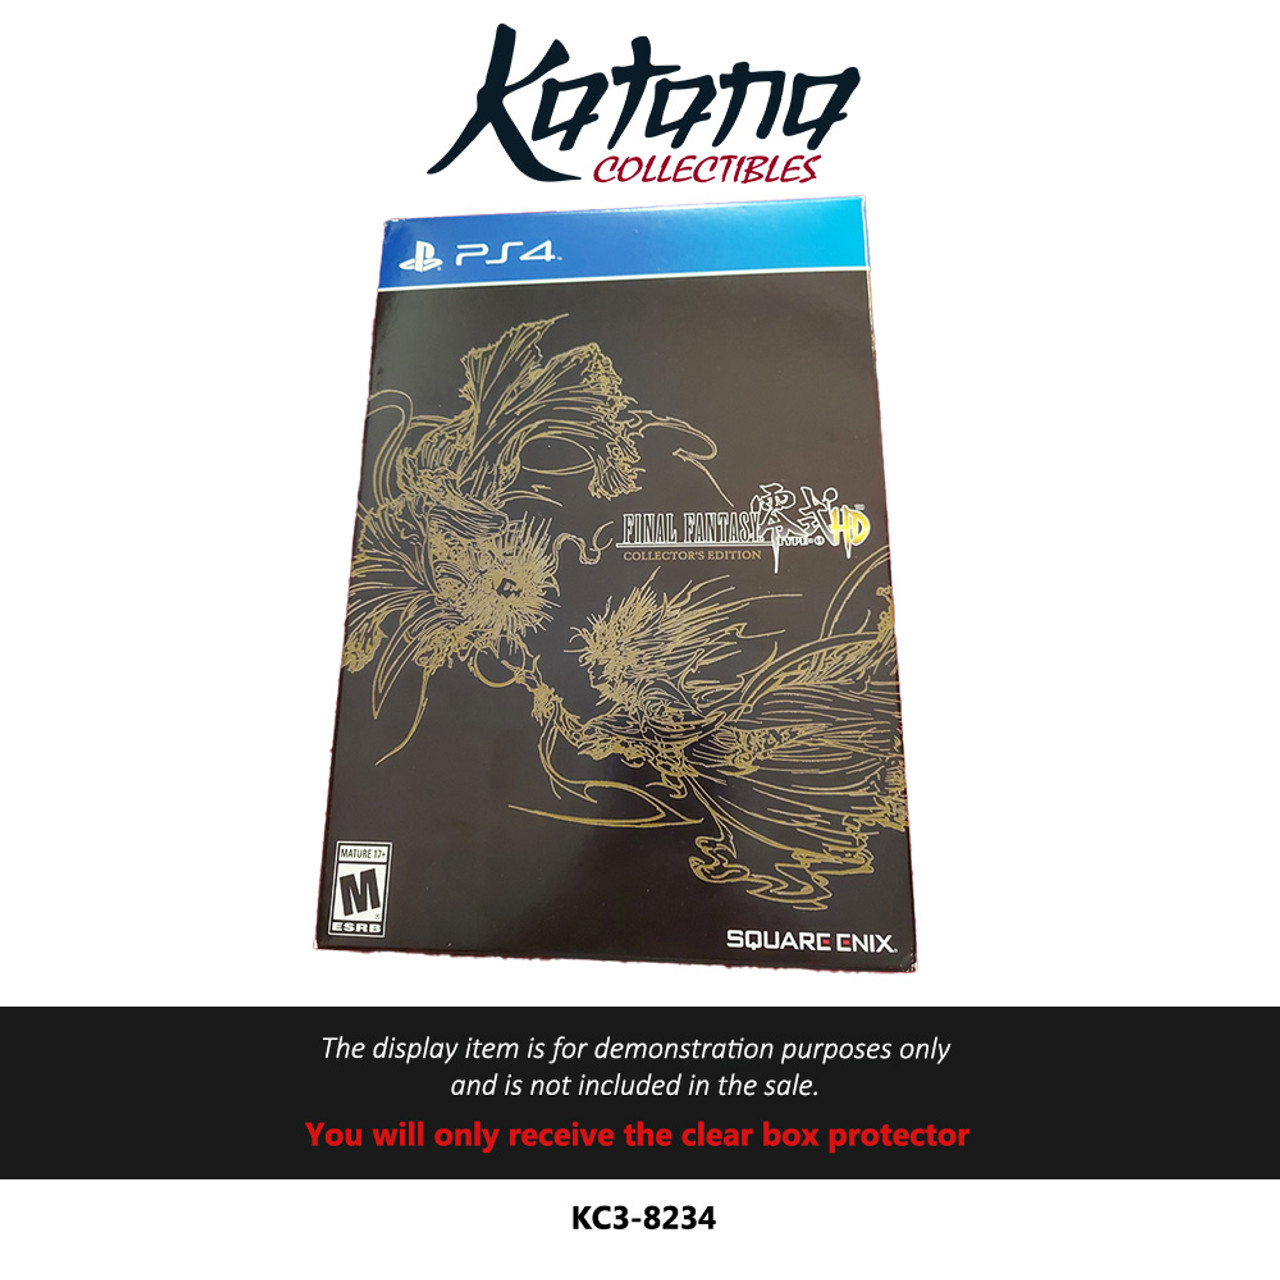 Katana Collectibles Protector For PS4 Final Fantasy type 0 HD Collector's edition